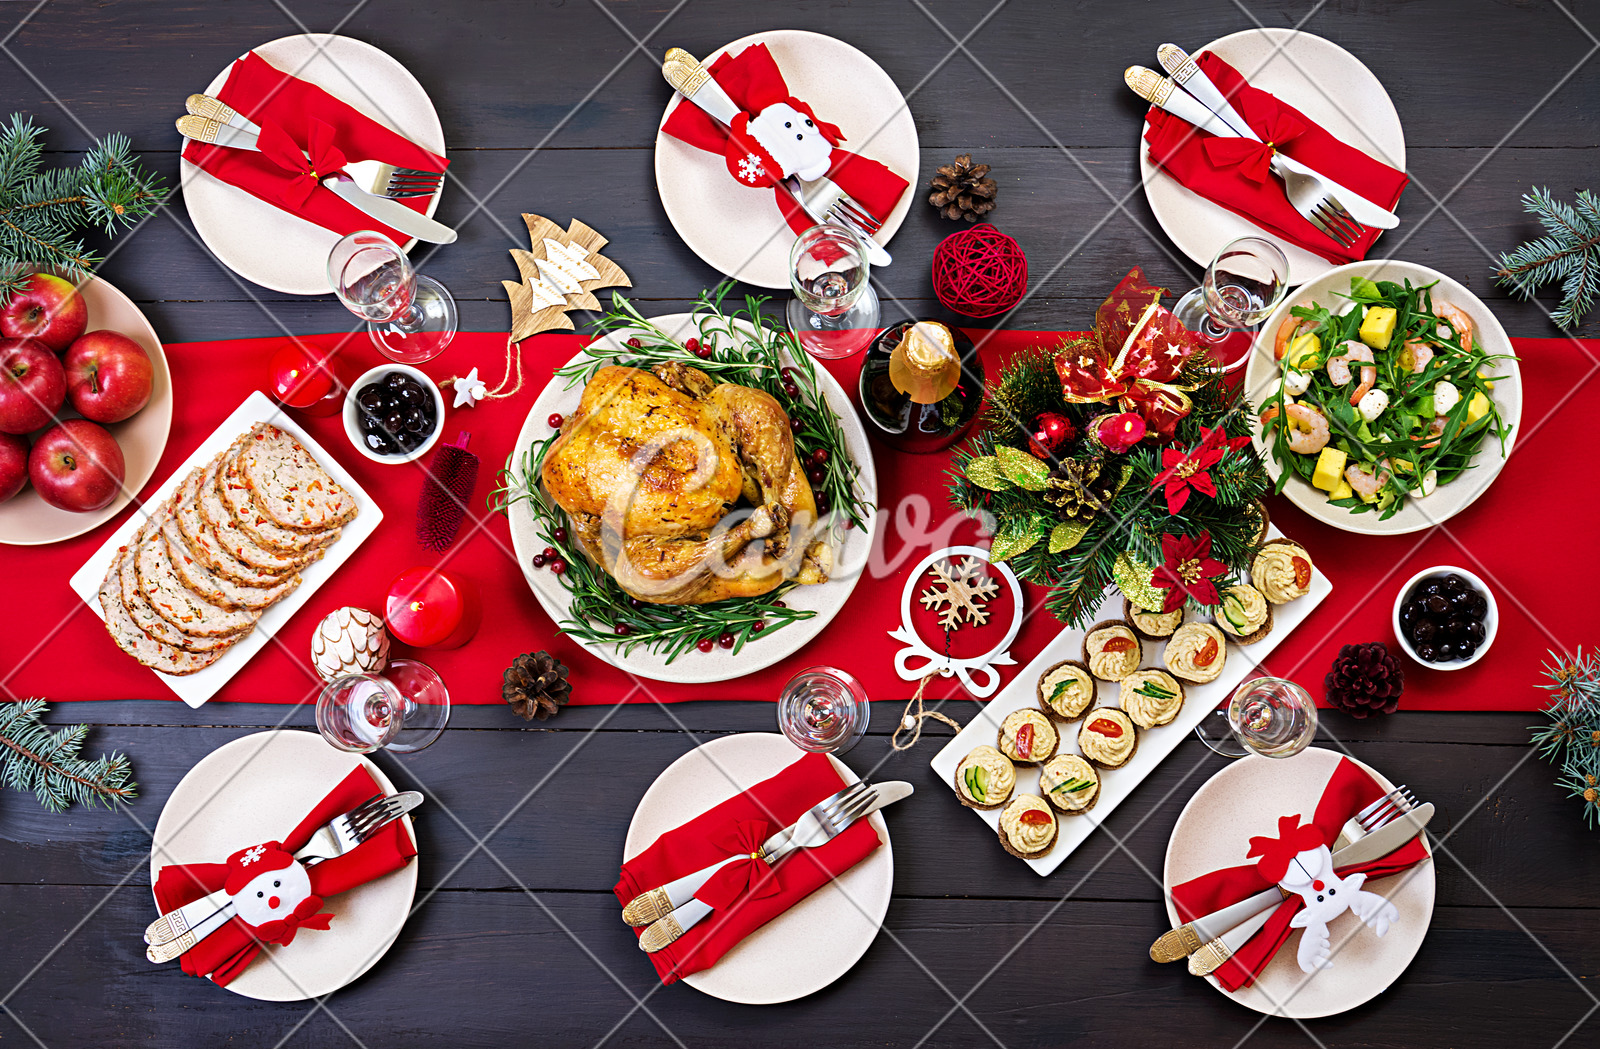 Baked Turkey Christmas Dinner The Christmas Table Is